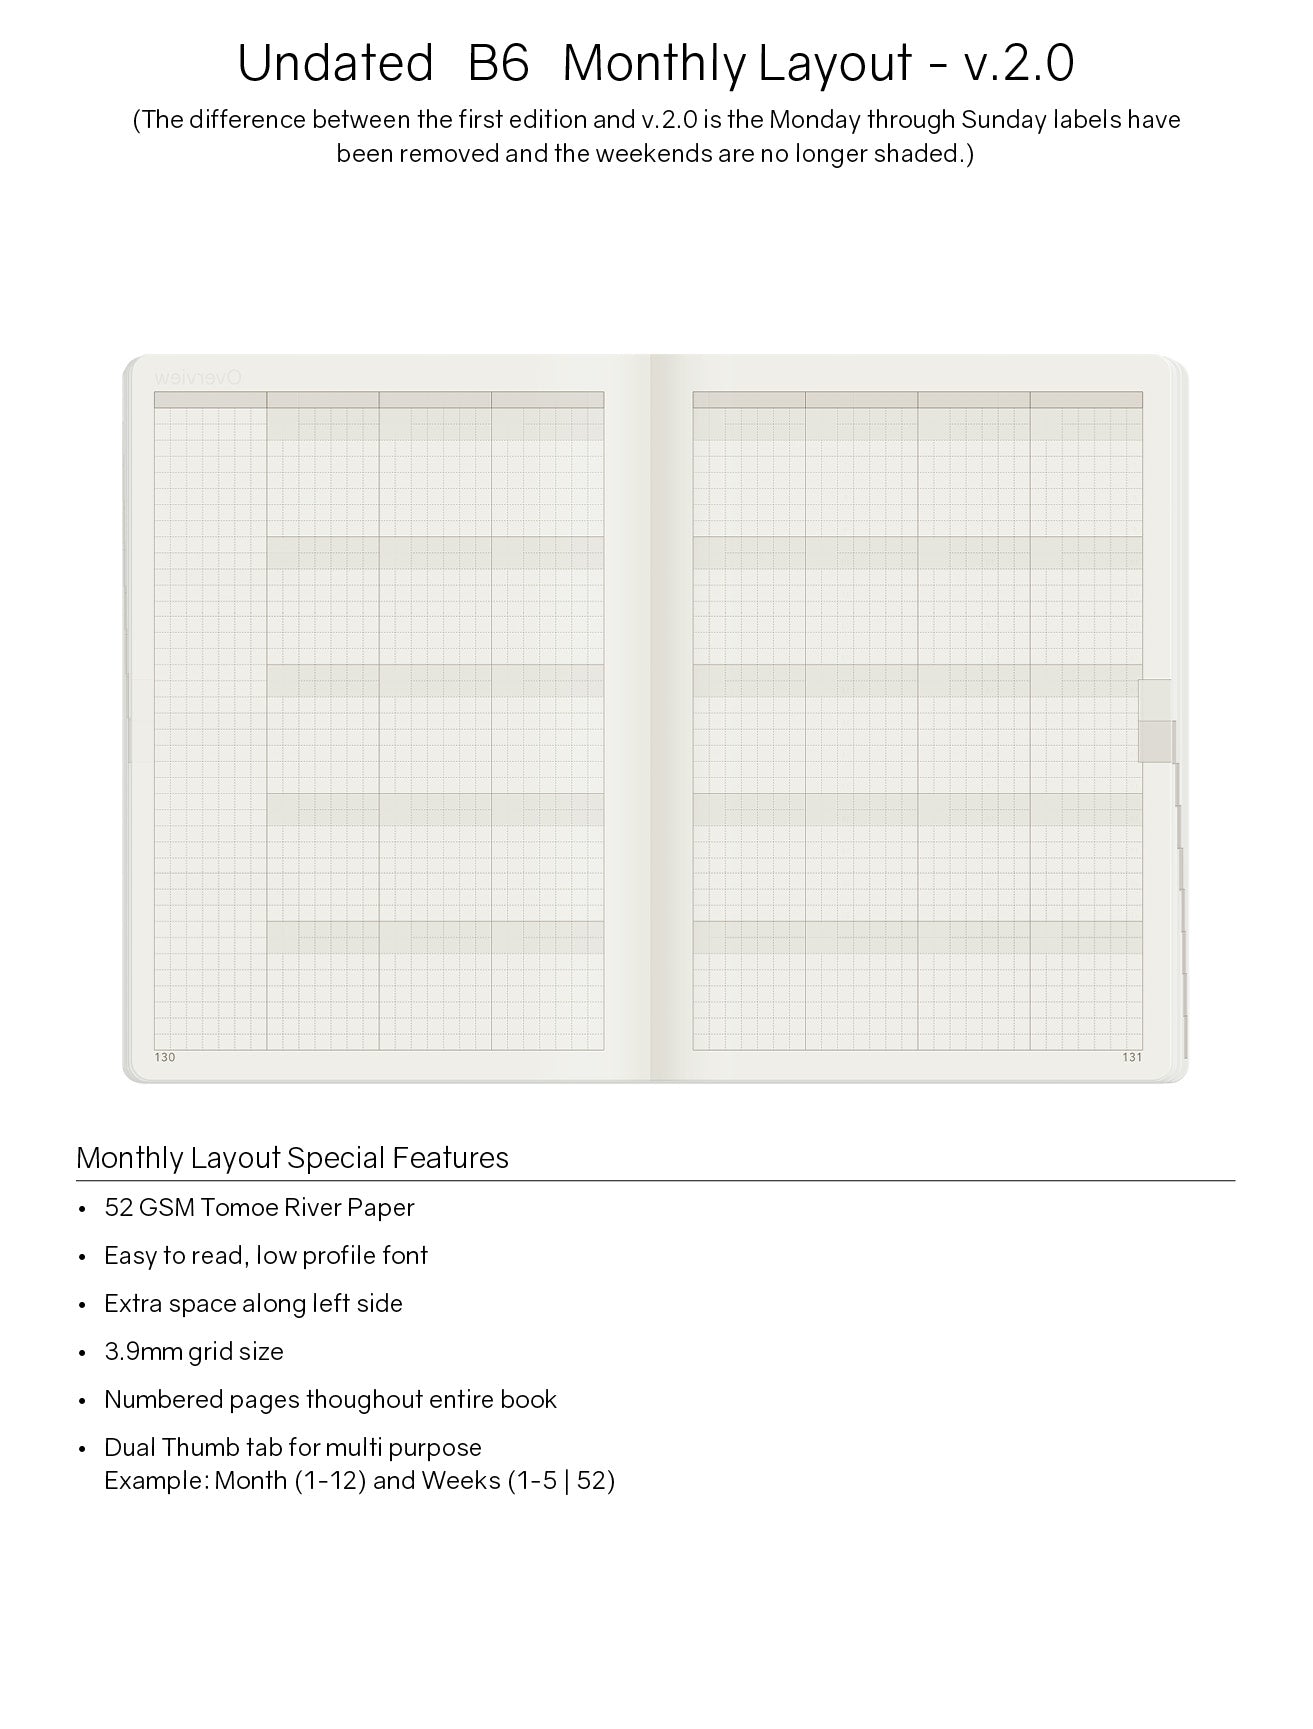 B6 Undated Weekly Planner v.2 - 52gsm Tomoe River Paper